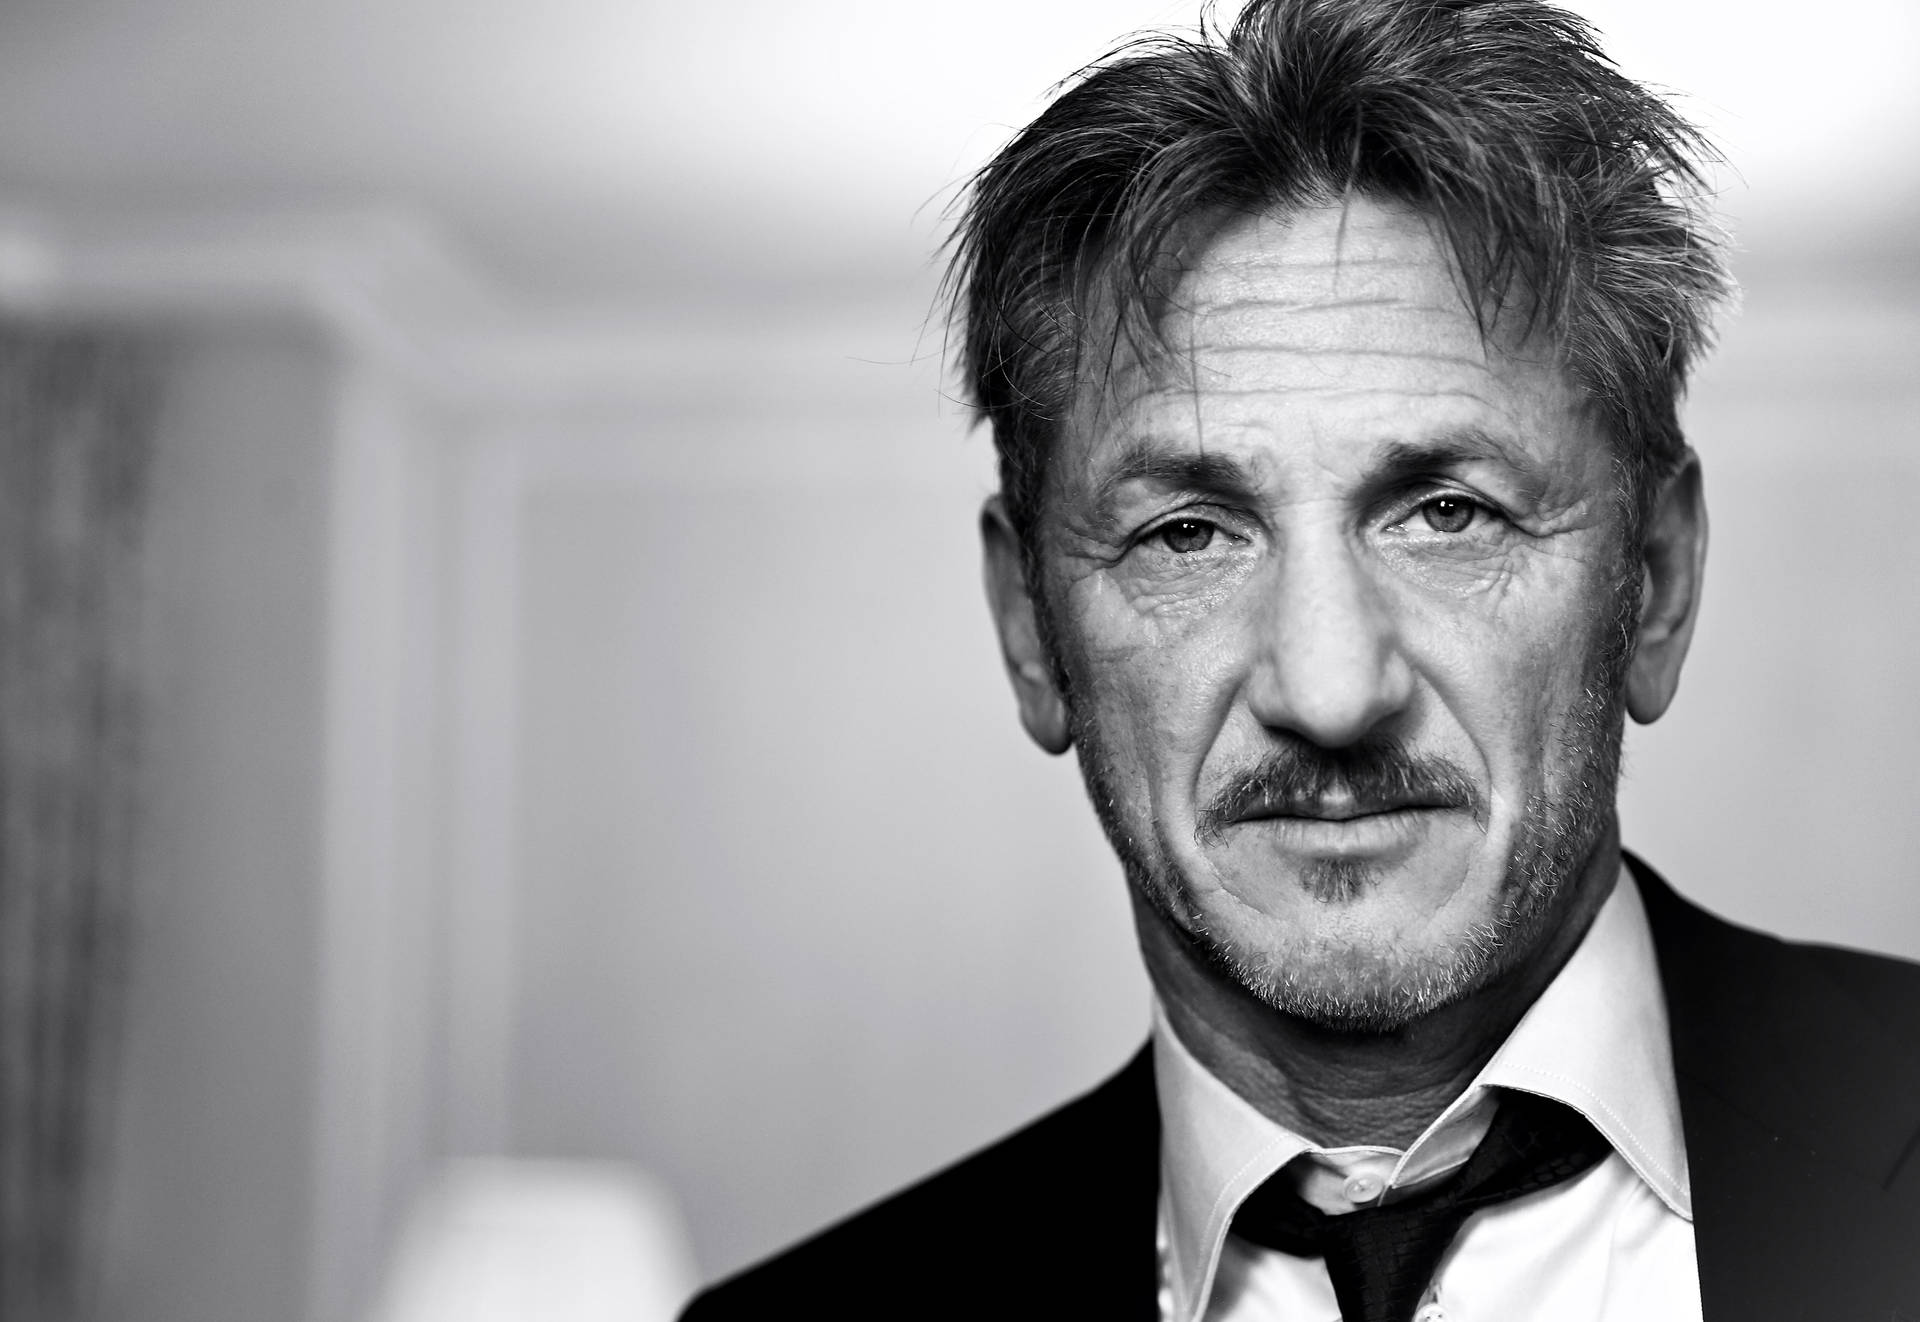 Sean Penn Portrait In Black And White Wallpaper